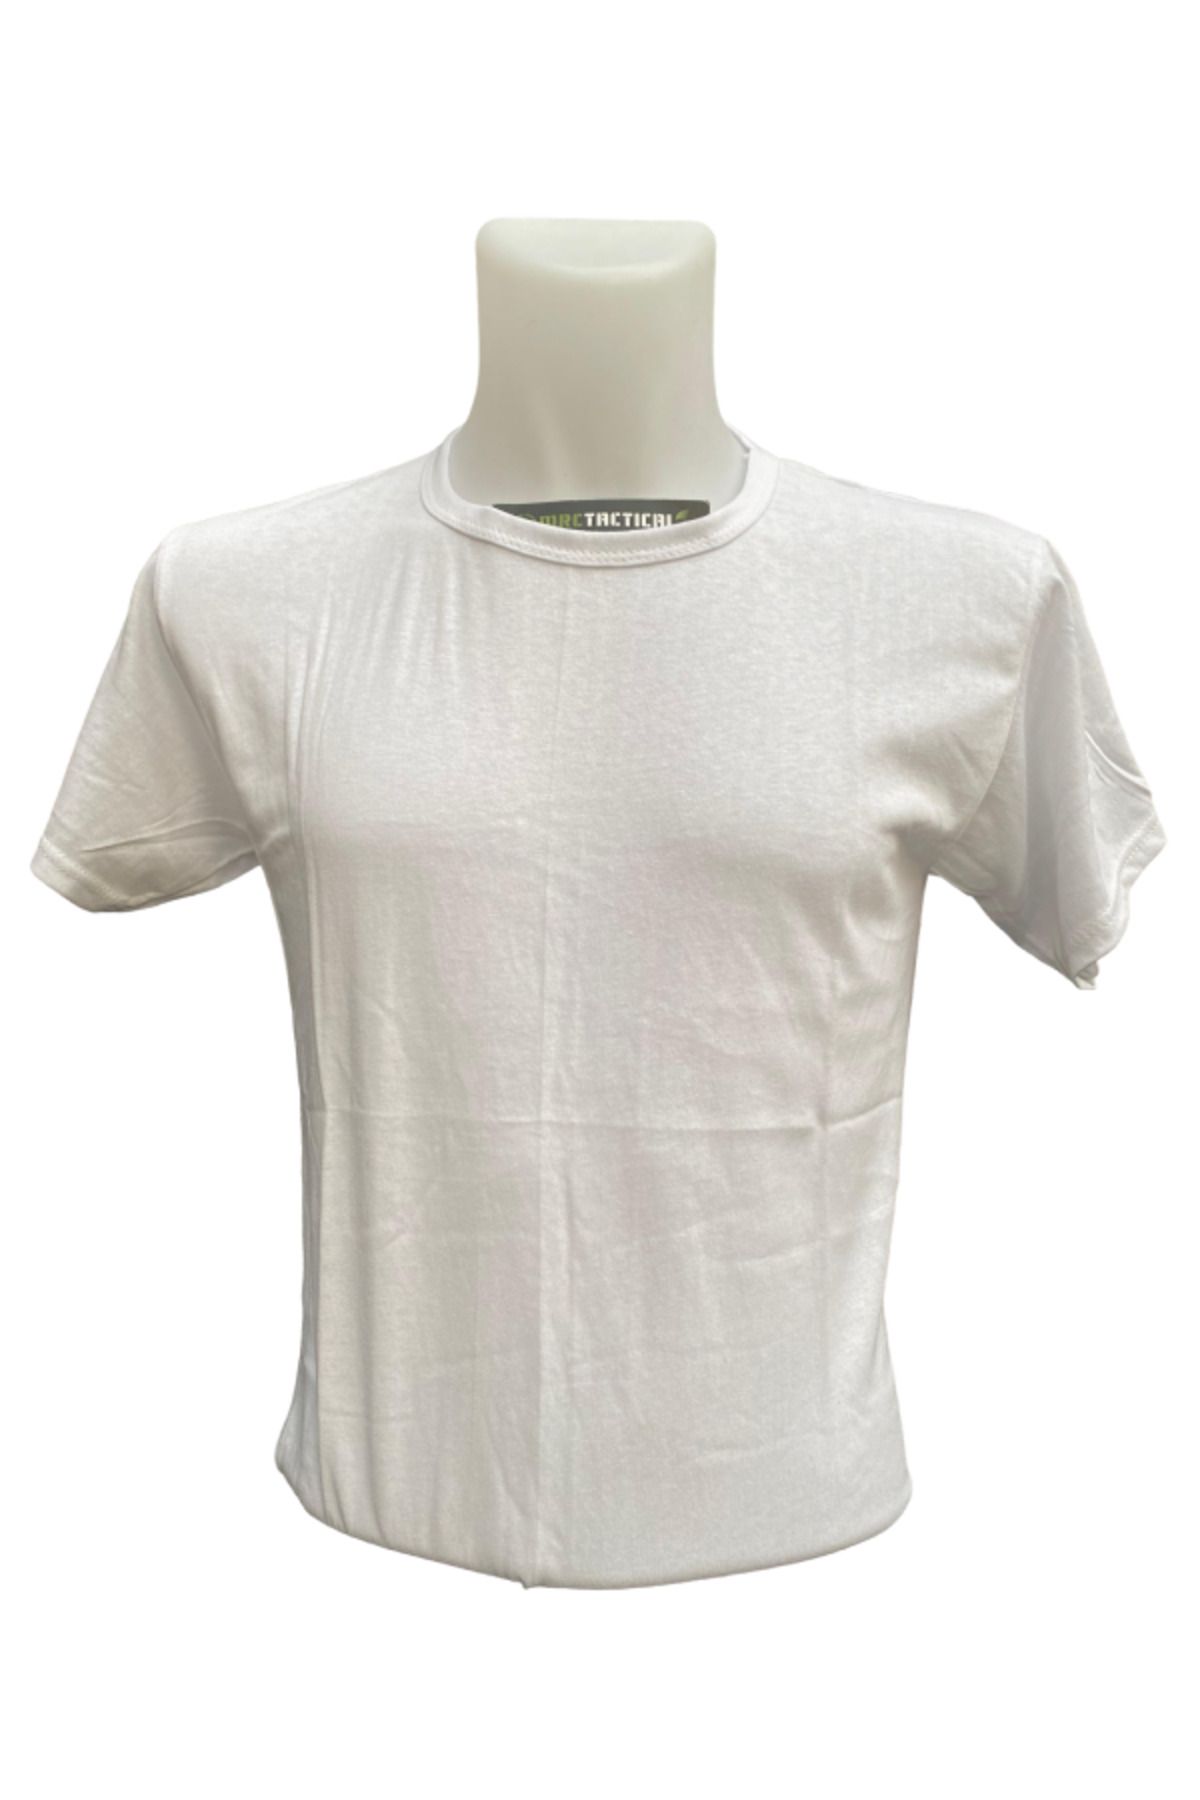 Mrc tactical Denizci Askeri Beyaz T-shirt - Fanila